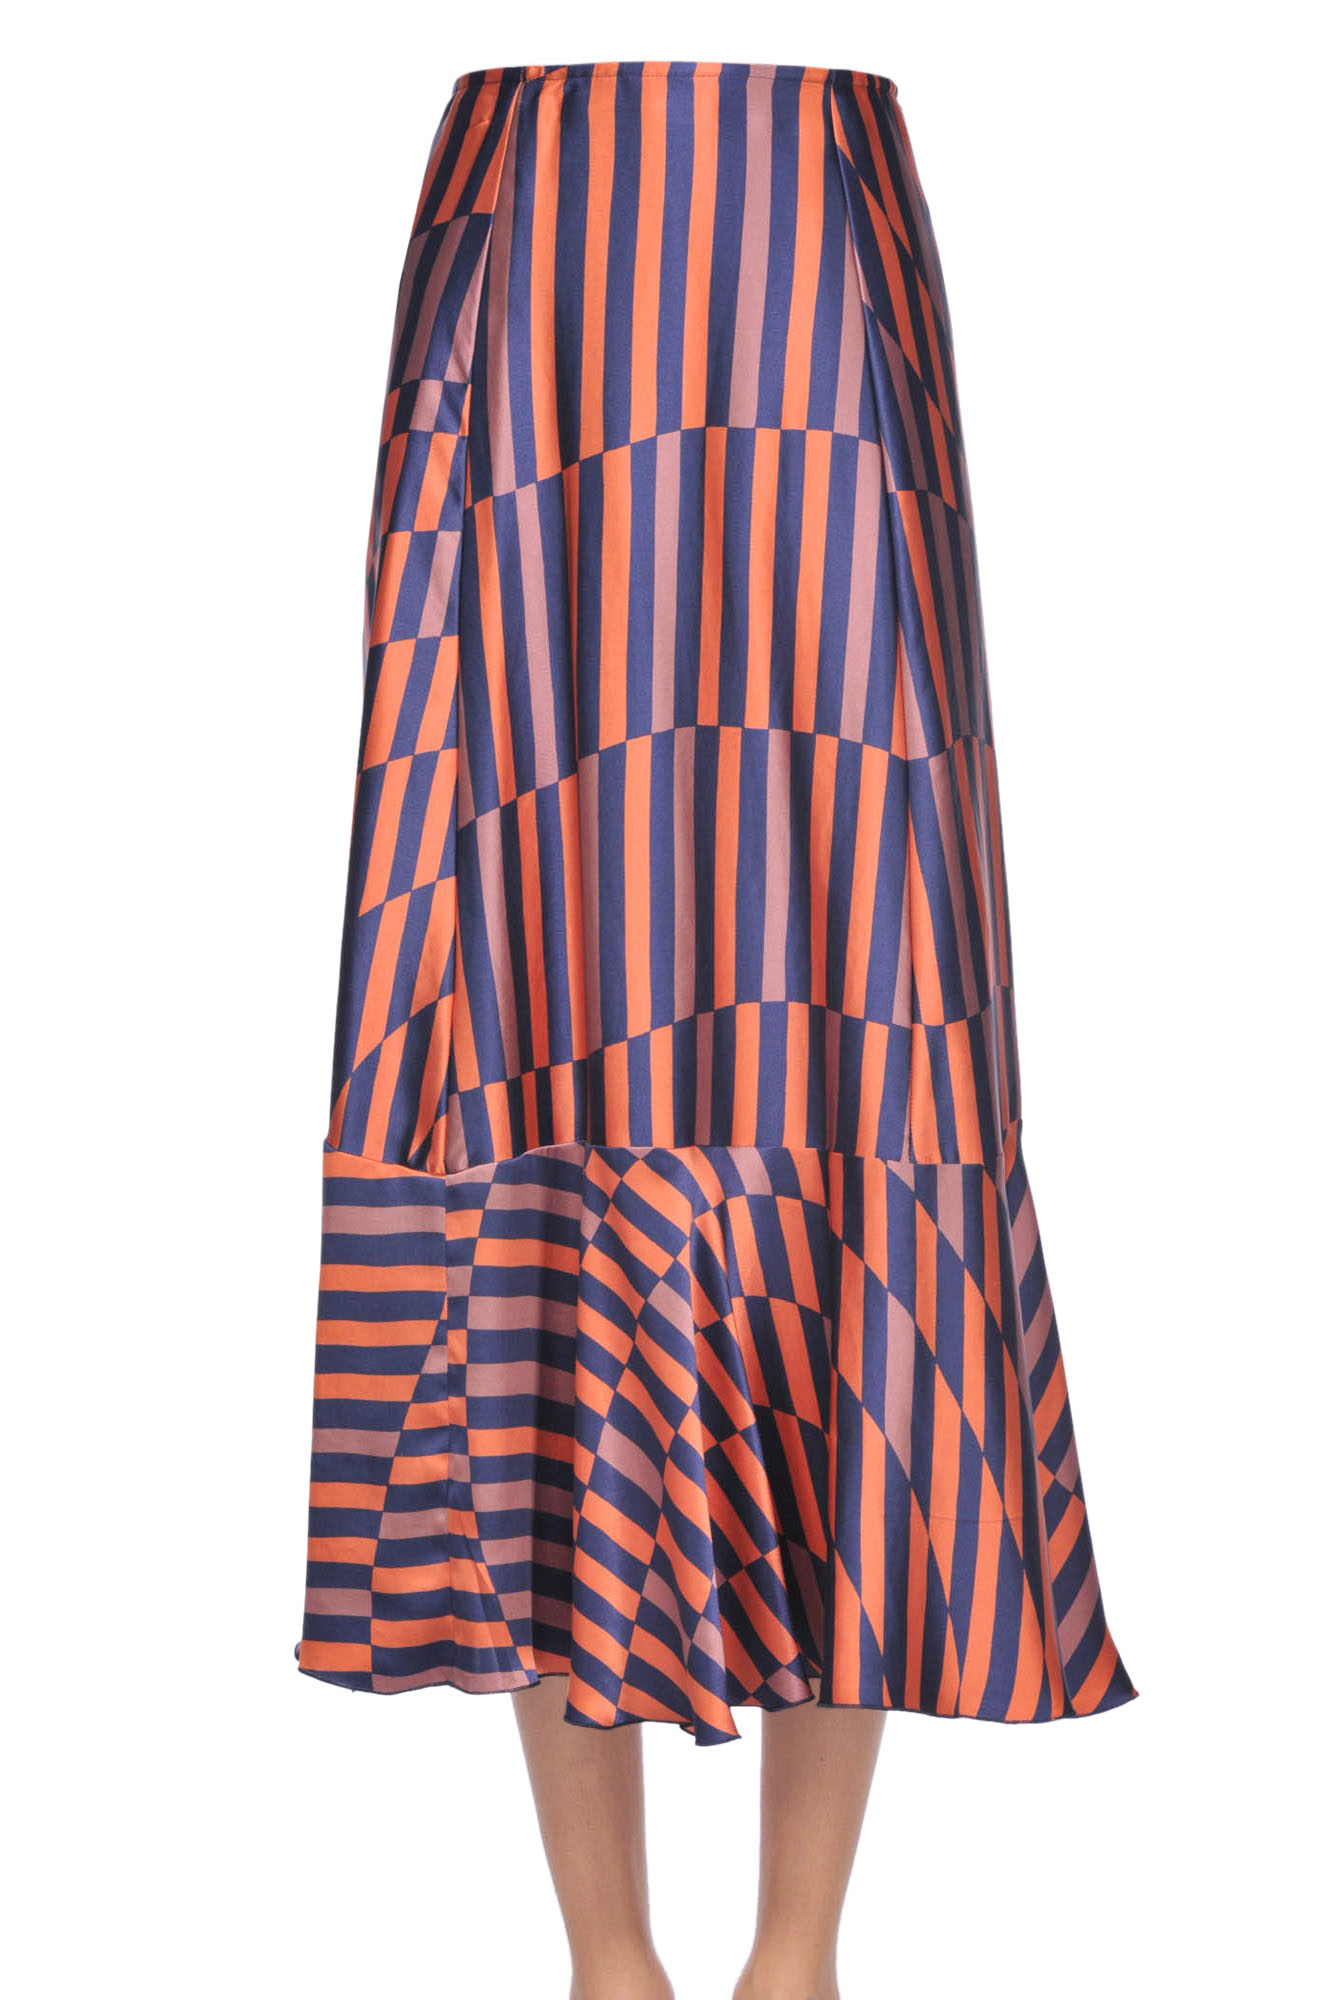 Dries Van Noten Silk skirt - Buy online on Glamest Fashion Outlet ...